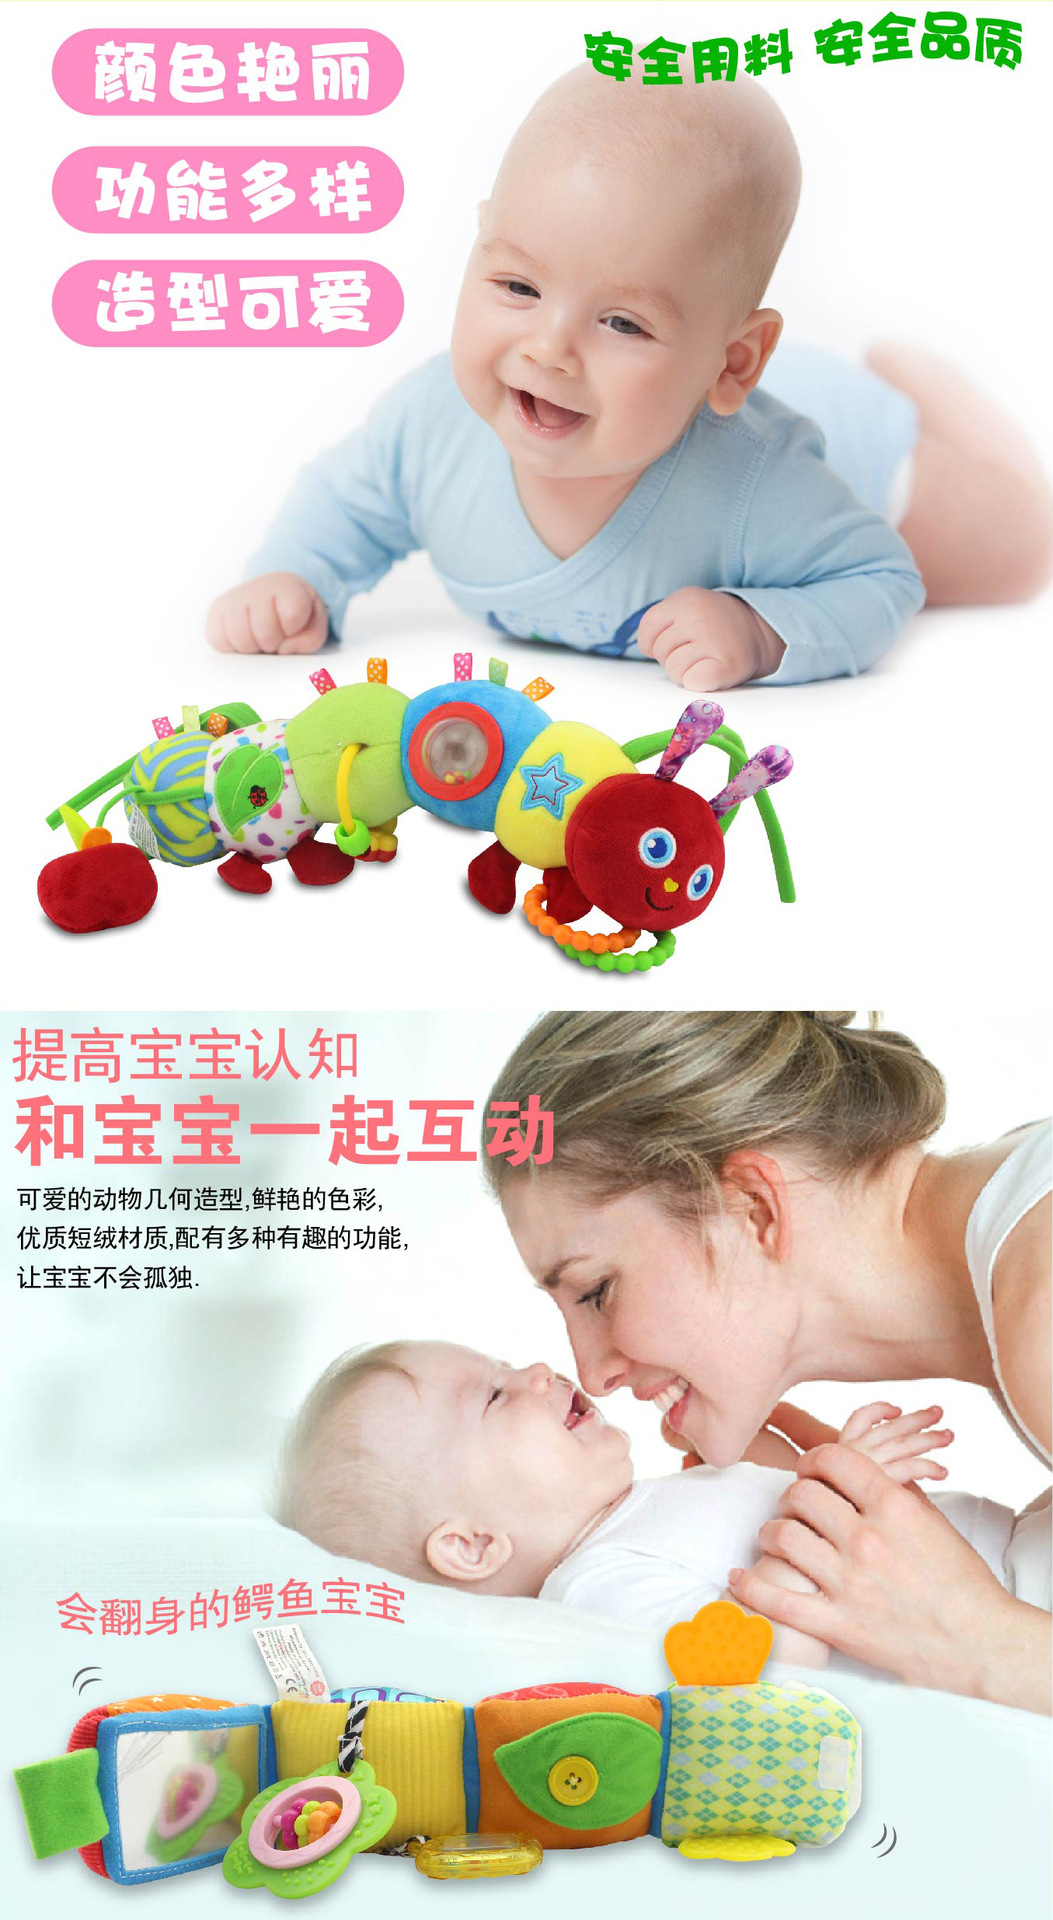 HAPPY MONKEY婴幼儿0-3岁宝宝闪光音乐毛毛虫毛绒玩具批发正品示例图3